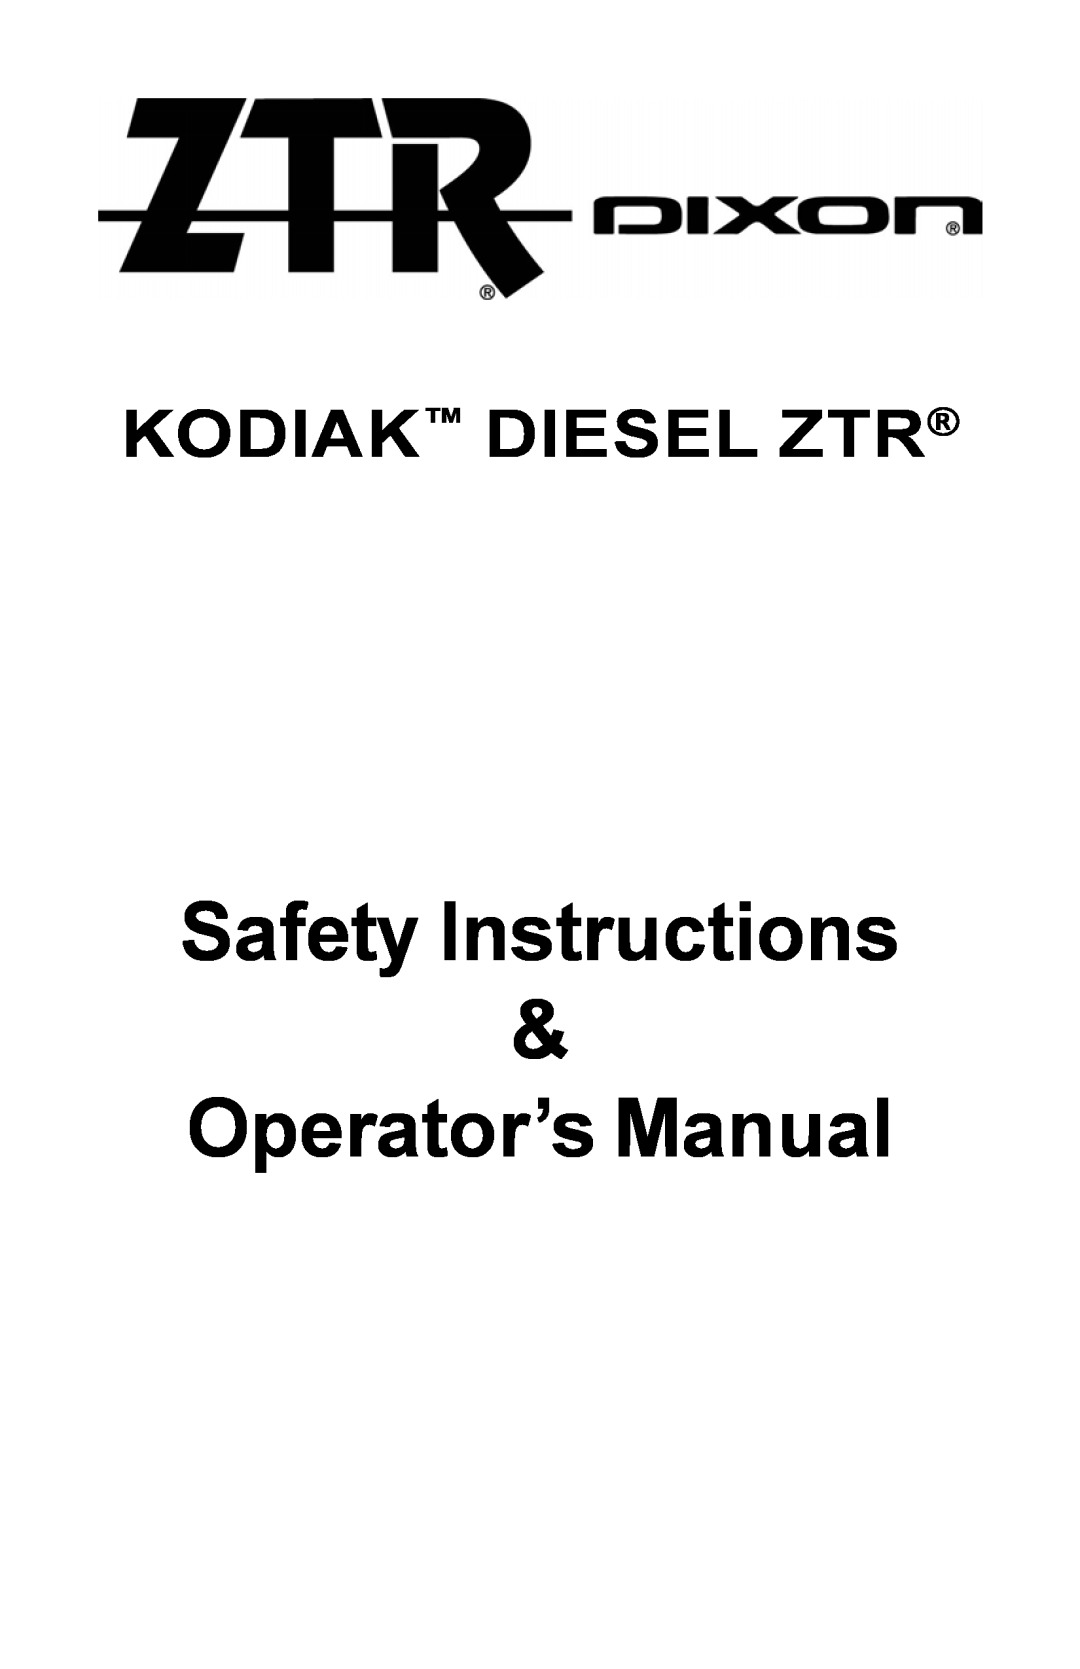 Dixon ZTR manual Safety Instructions, Operator’s Manual, Kodiak Diesel Ztr 